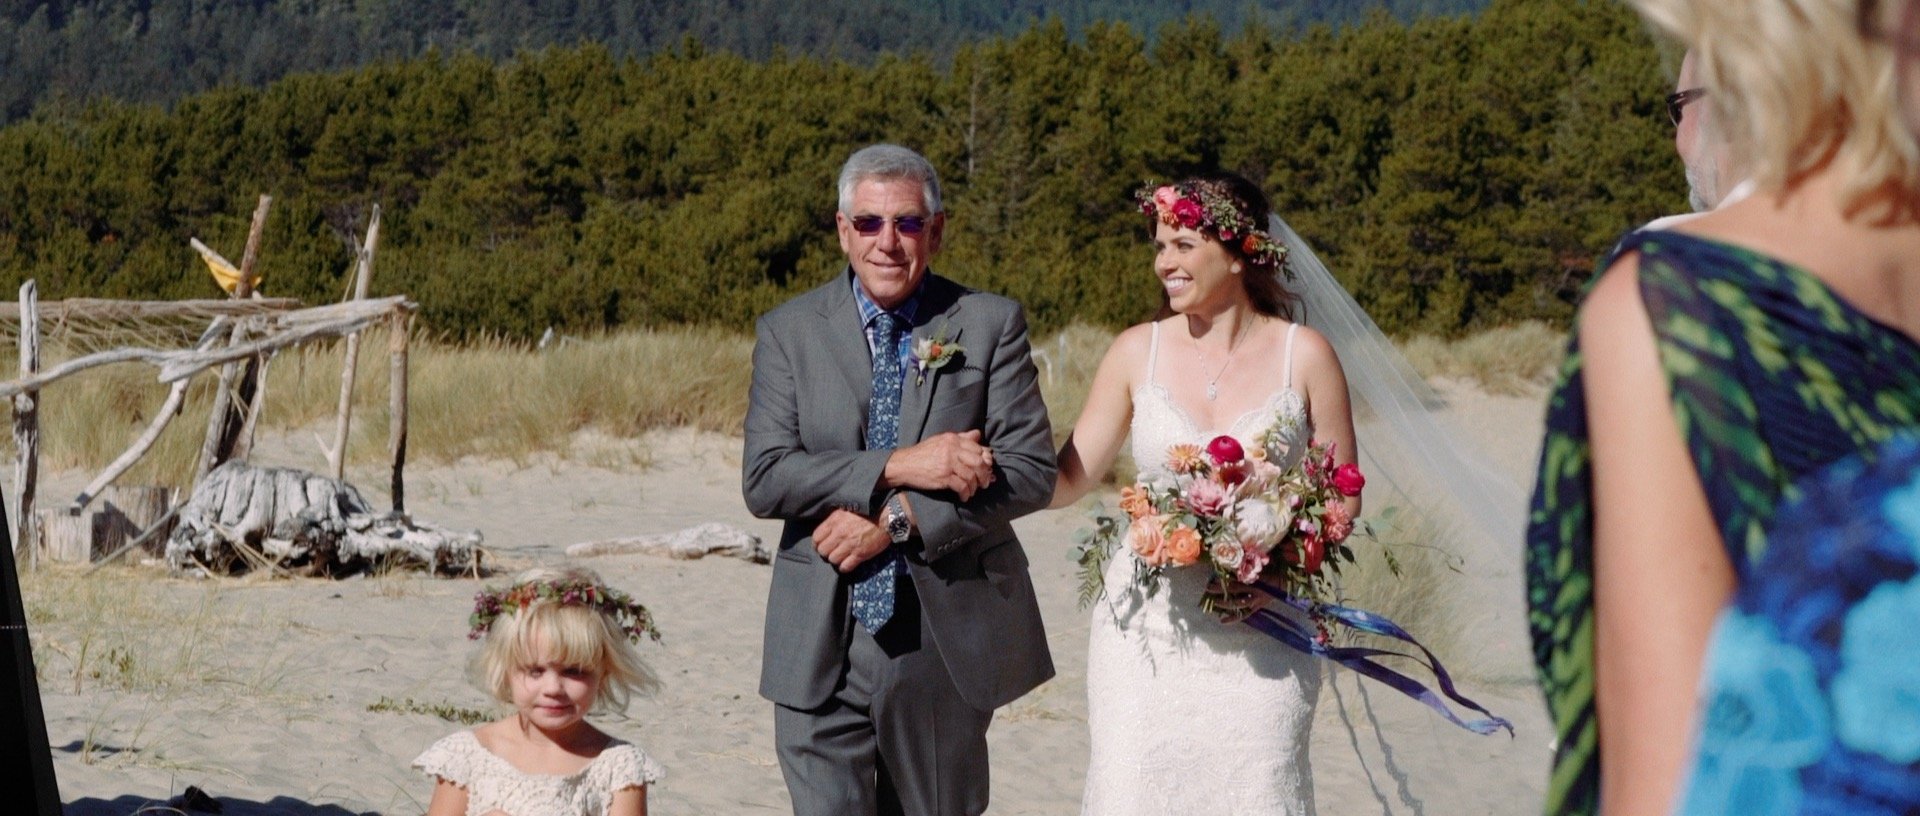 Oregon coast wedding videographer 15.jpg